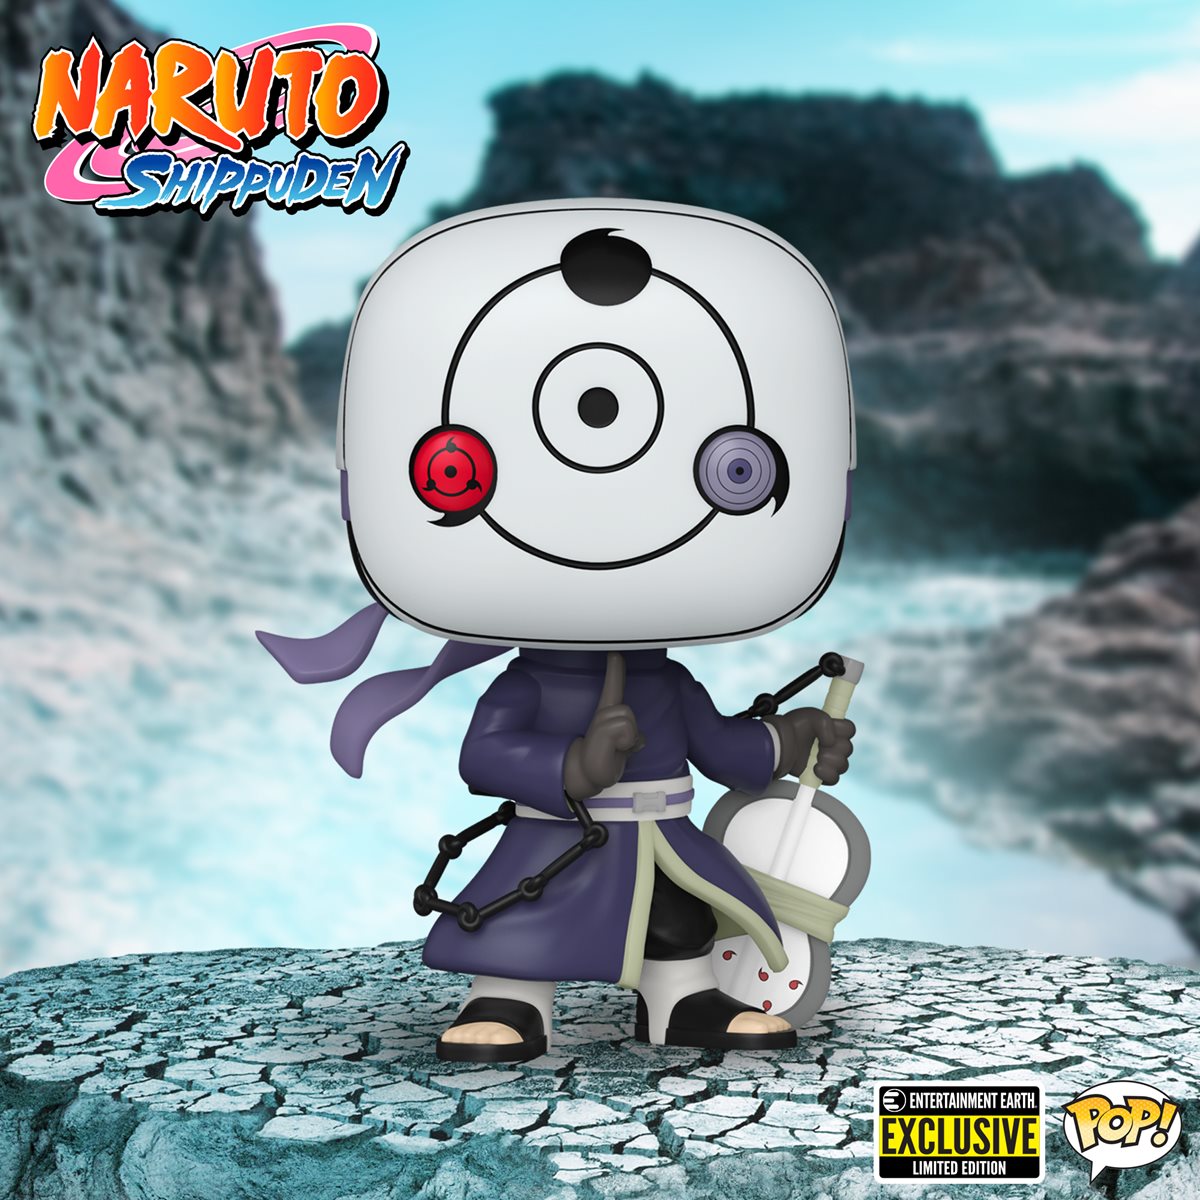 Funko Pop! Naruto Shippuden: Obito Uchiha as Madara Uchiha (Rinnegan + Sharingam) Funko Pop! Vinyl Figure - Entertainment Earth Exclusive